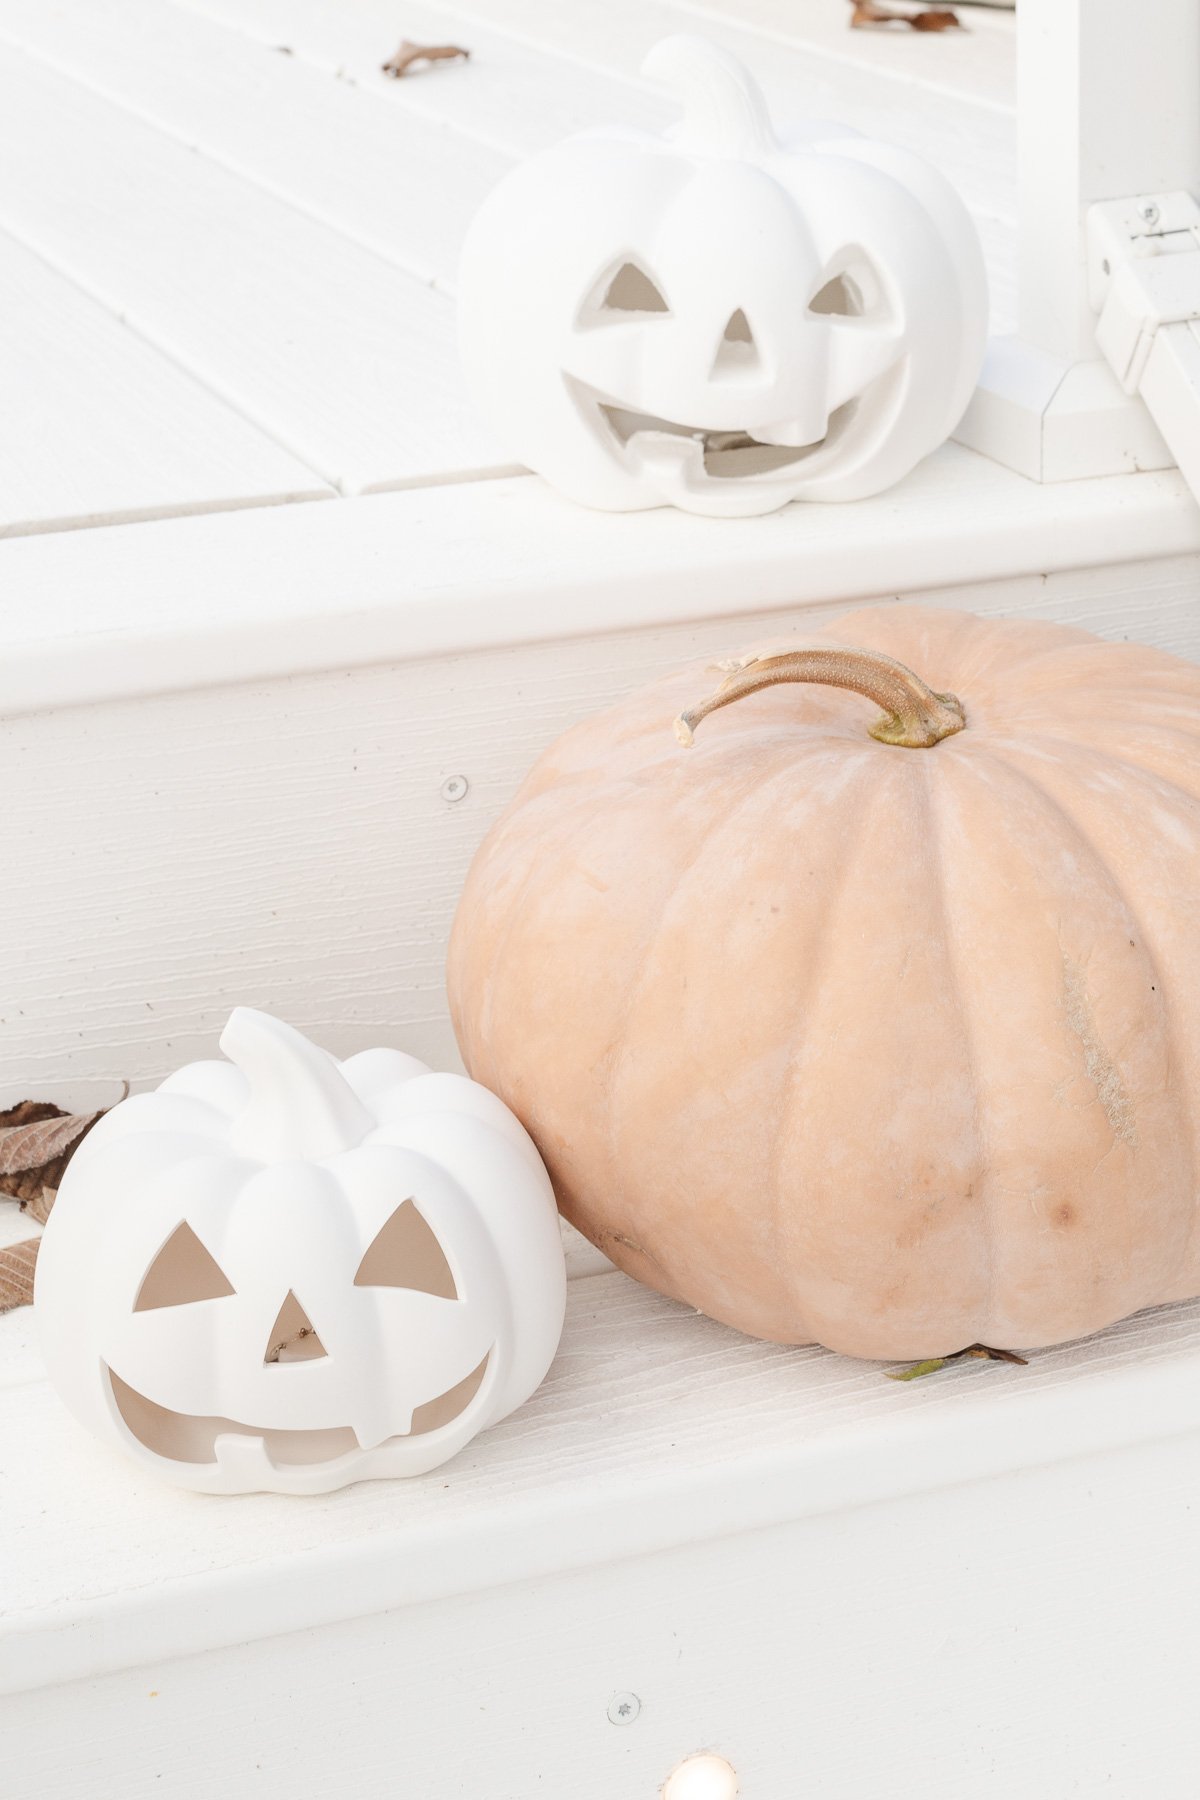 A white faux pumpkin jack o lantern and a peach faux pumpkin on white porch steps.